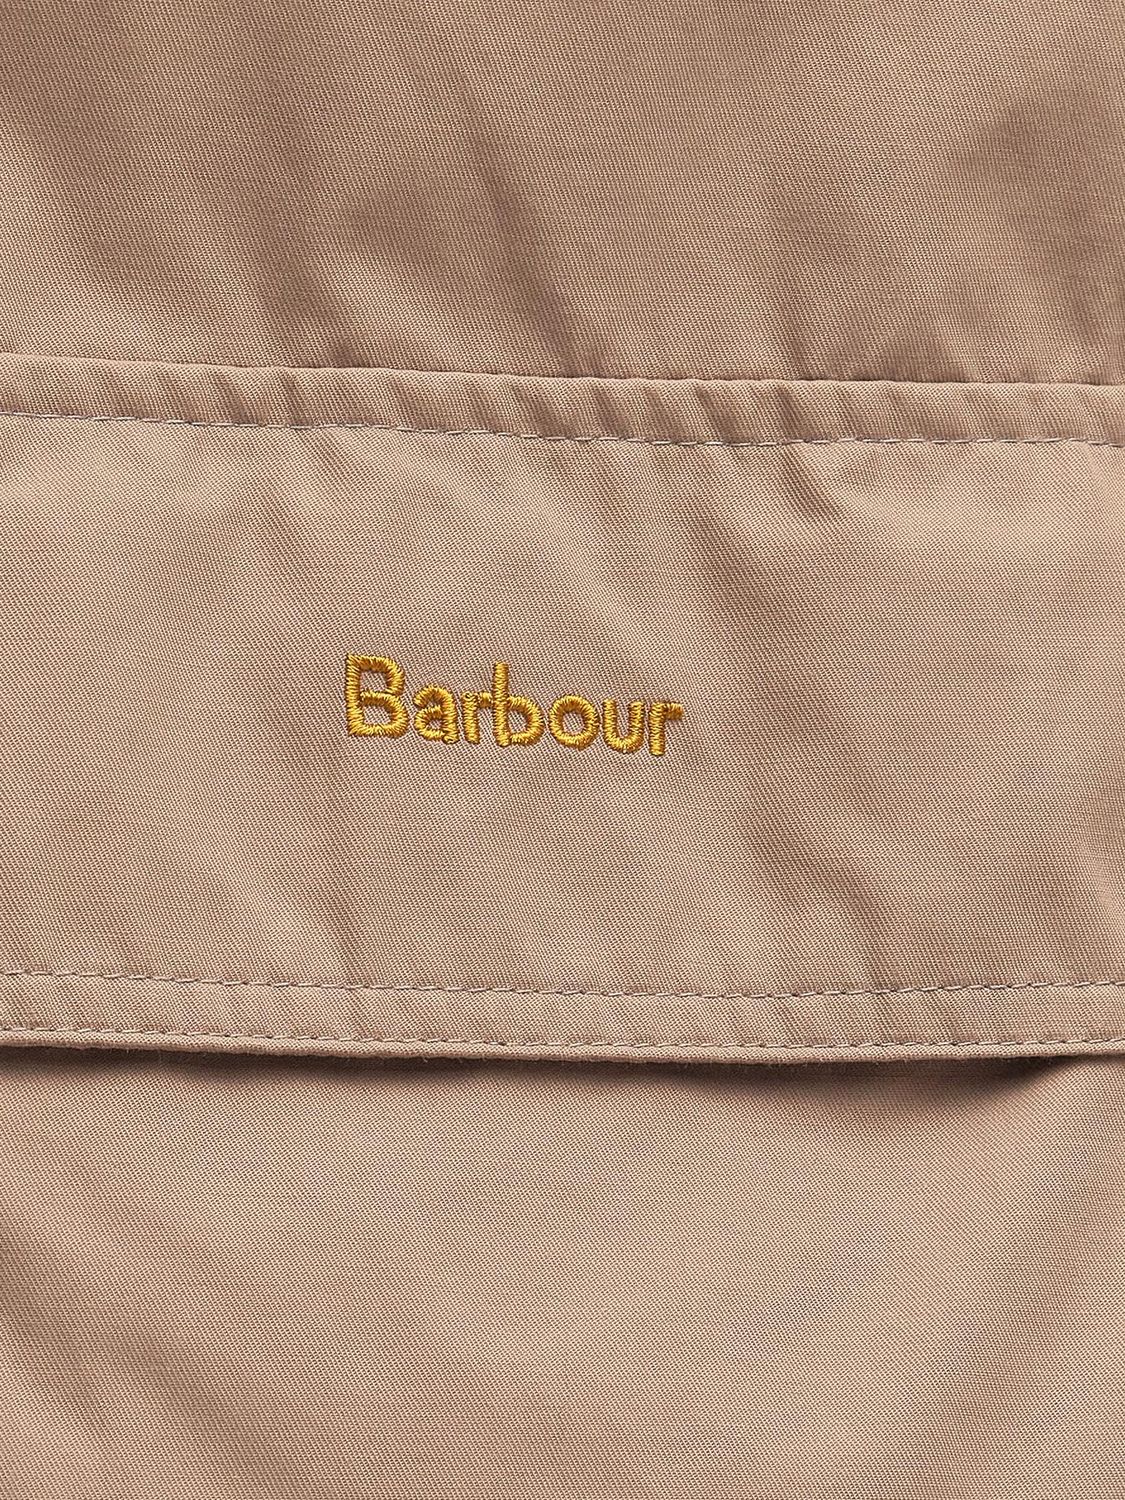 Buy Barbour Perez Showerproof Jacket Online at johnlewis.com